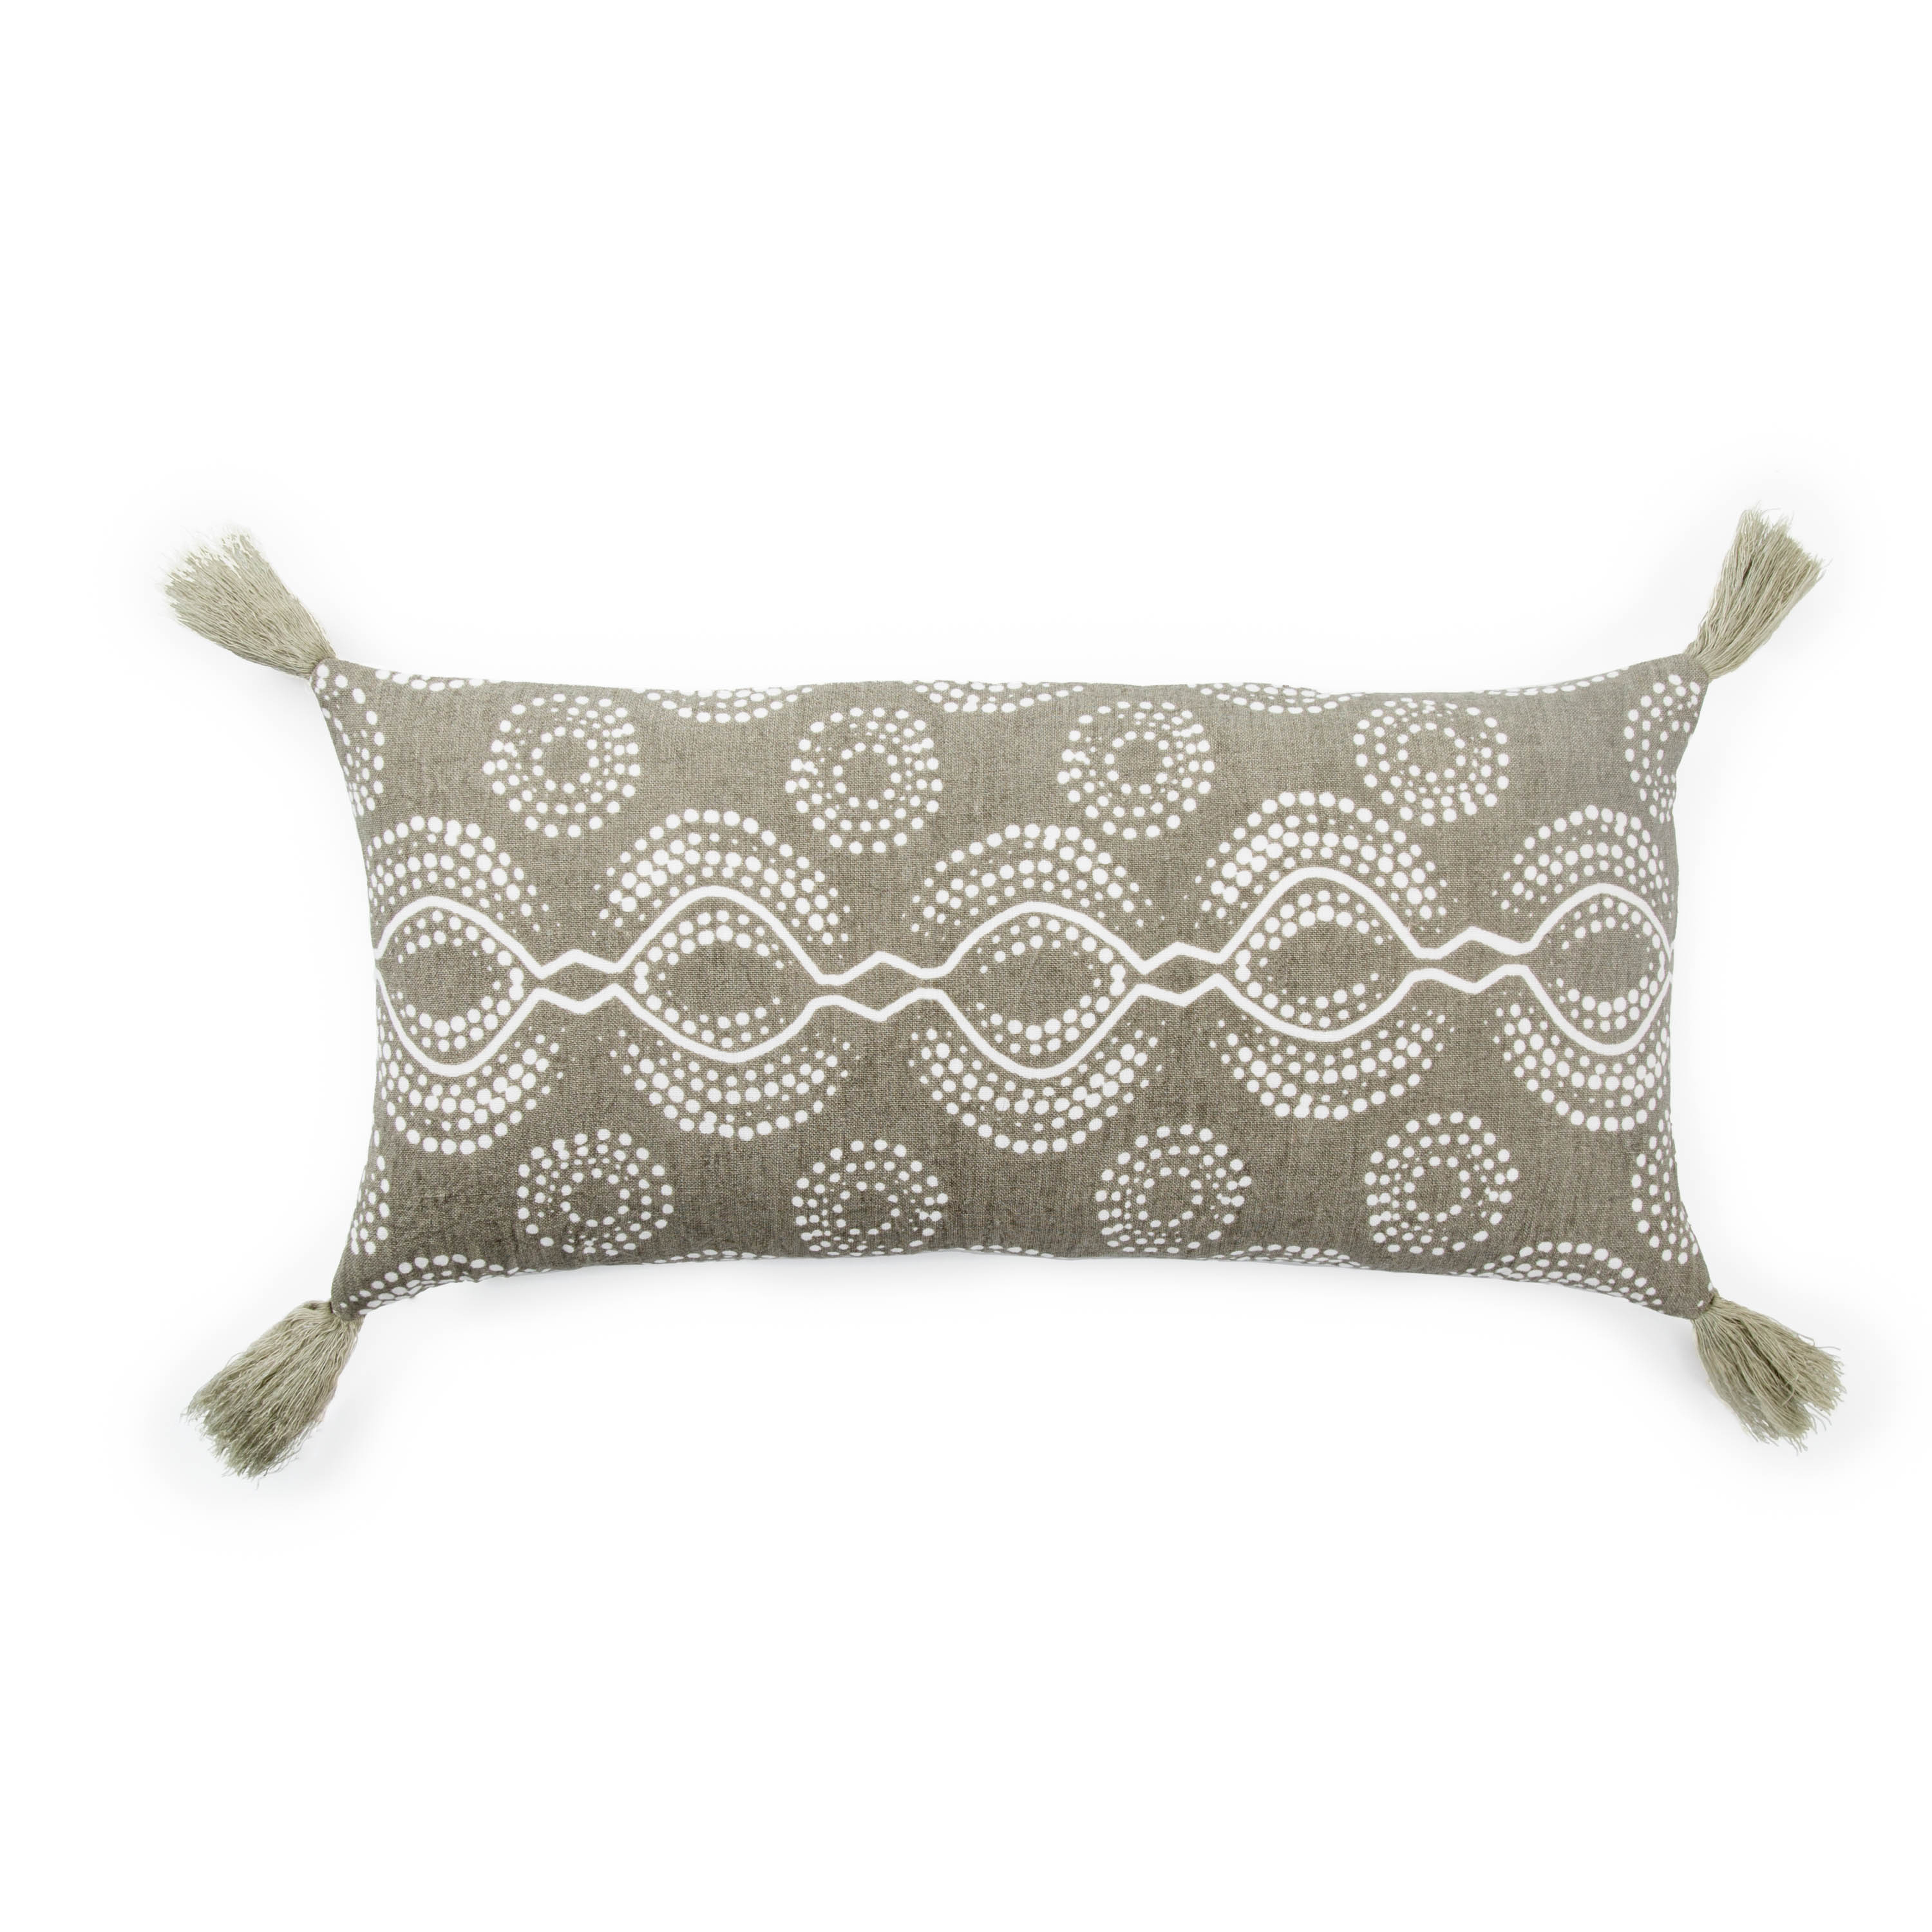 Makenzie Lumbar Pillow, 21" x 10", Taupe - DISCONTINUED - Cove Goods